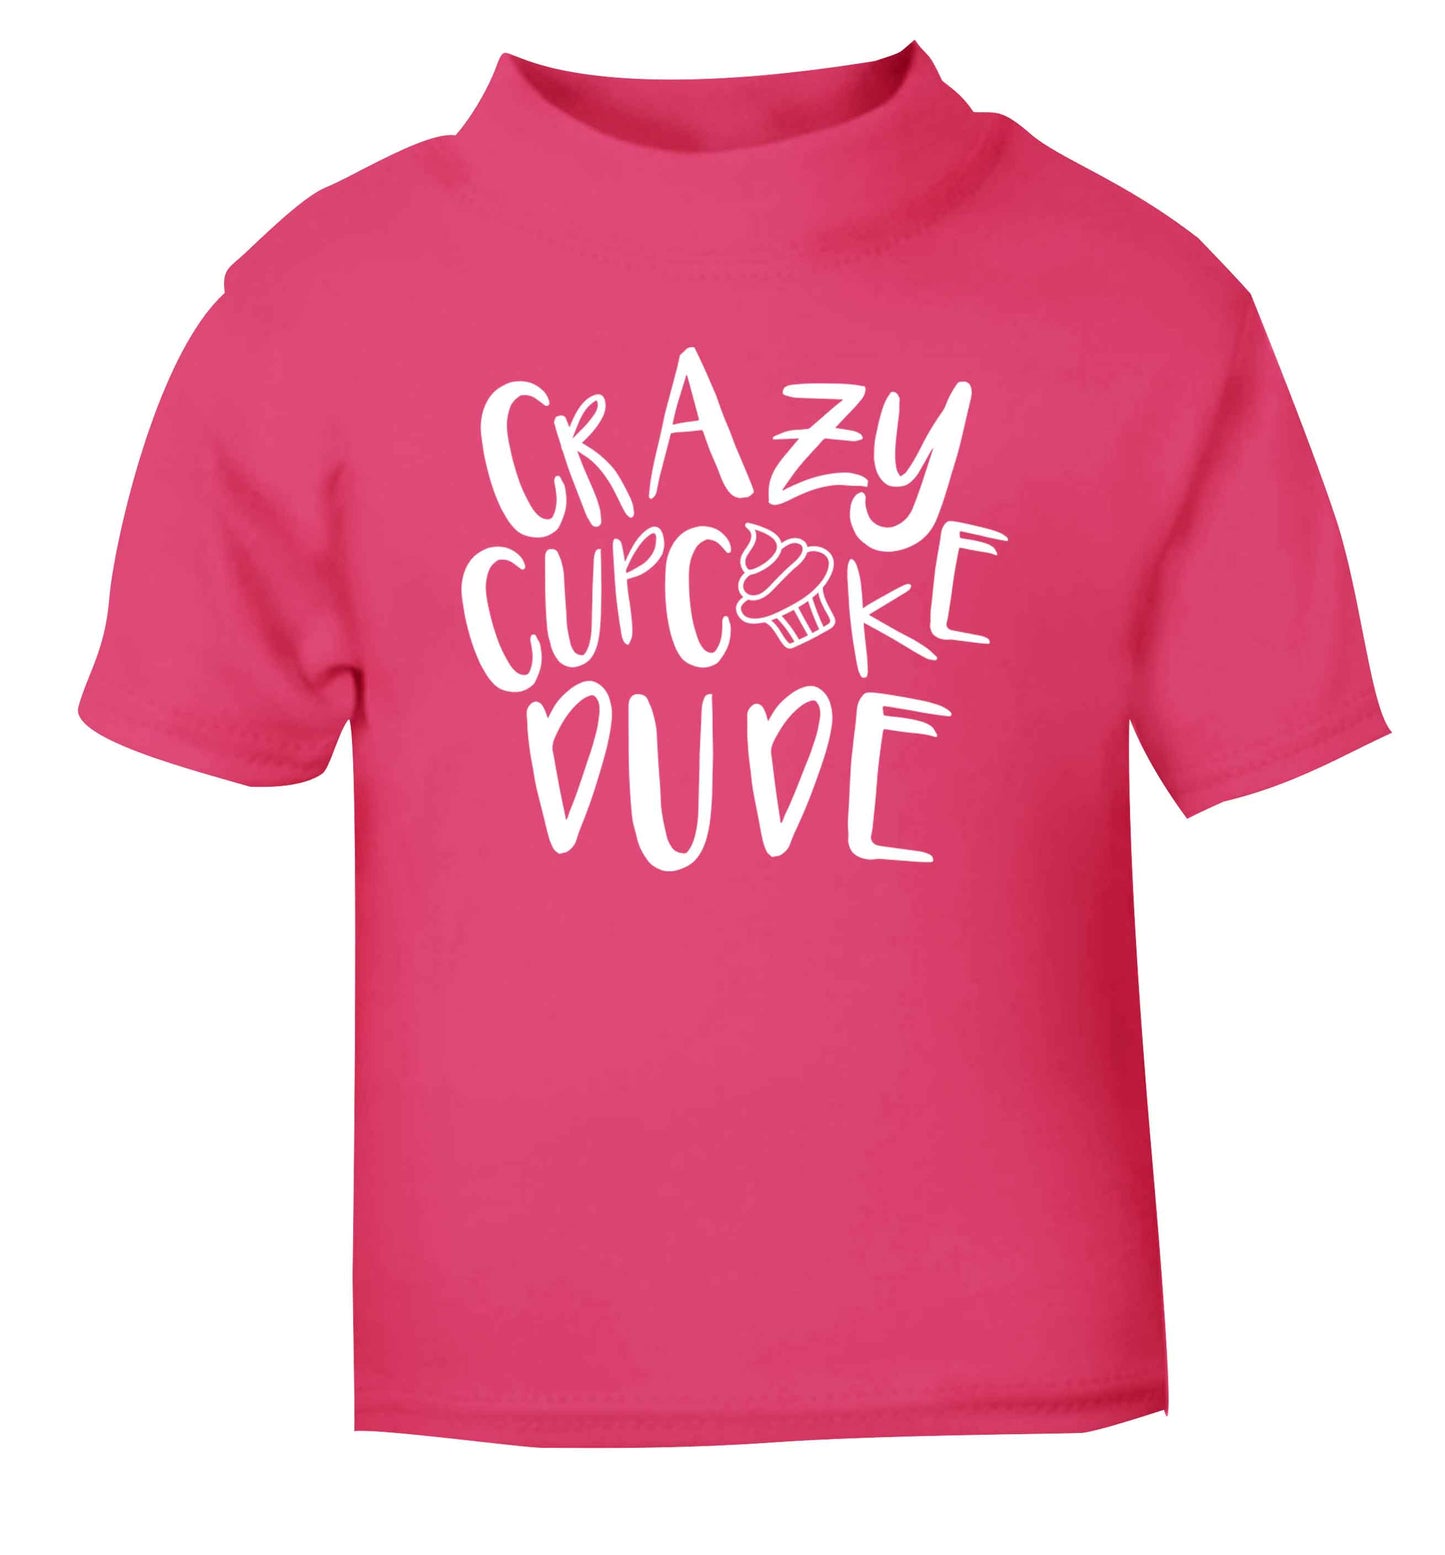 Crazy cupcake dude pink Baby Toddler Tshirt 2 Years